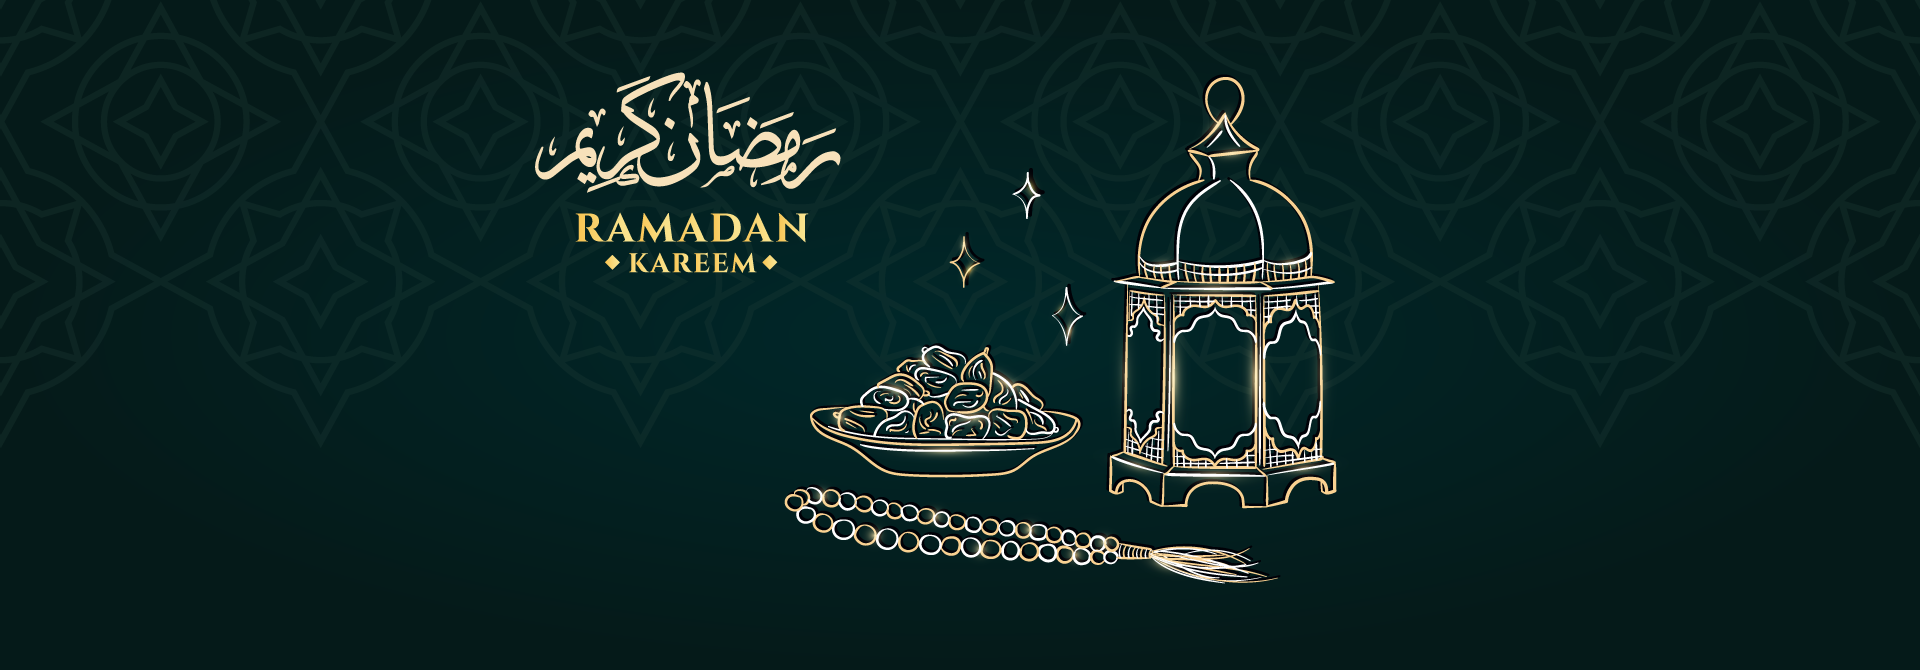 Ramadan24